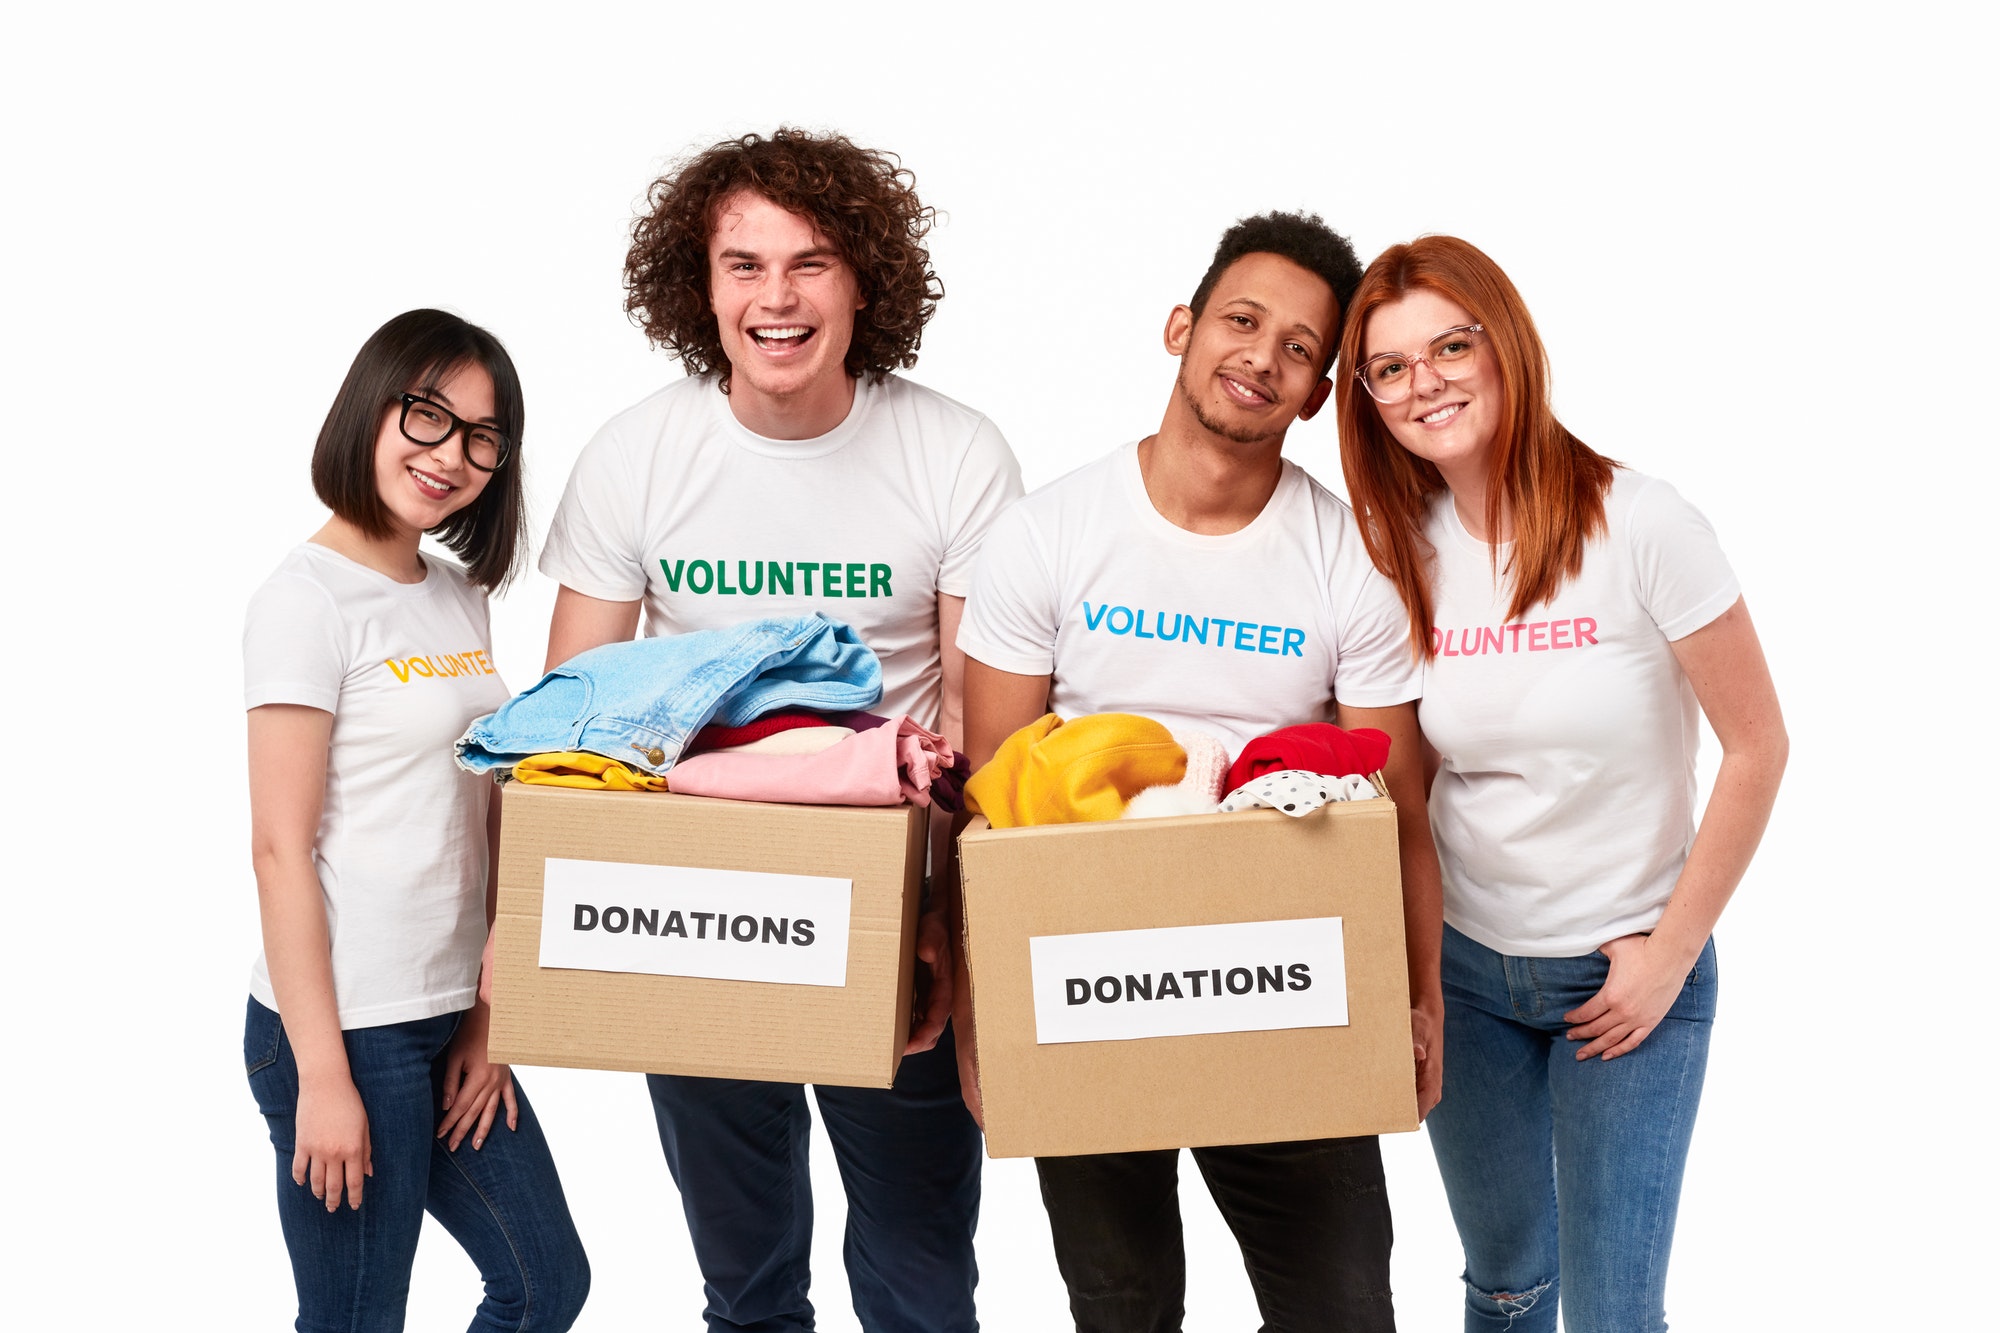 International volunteers with donations